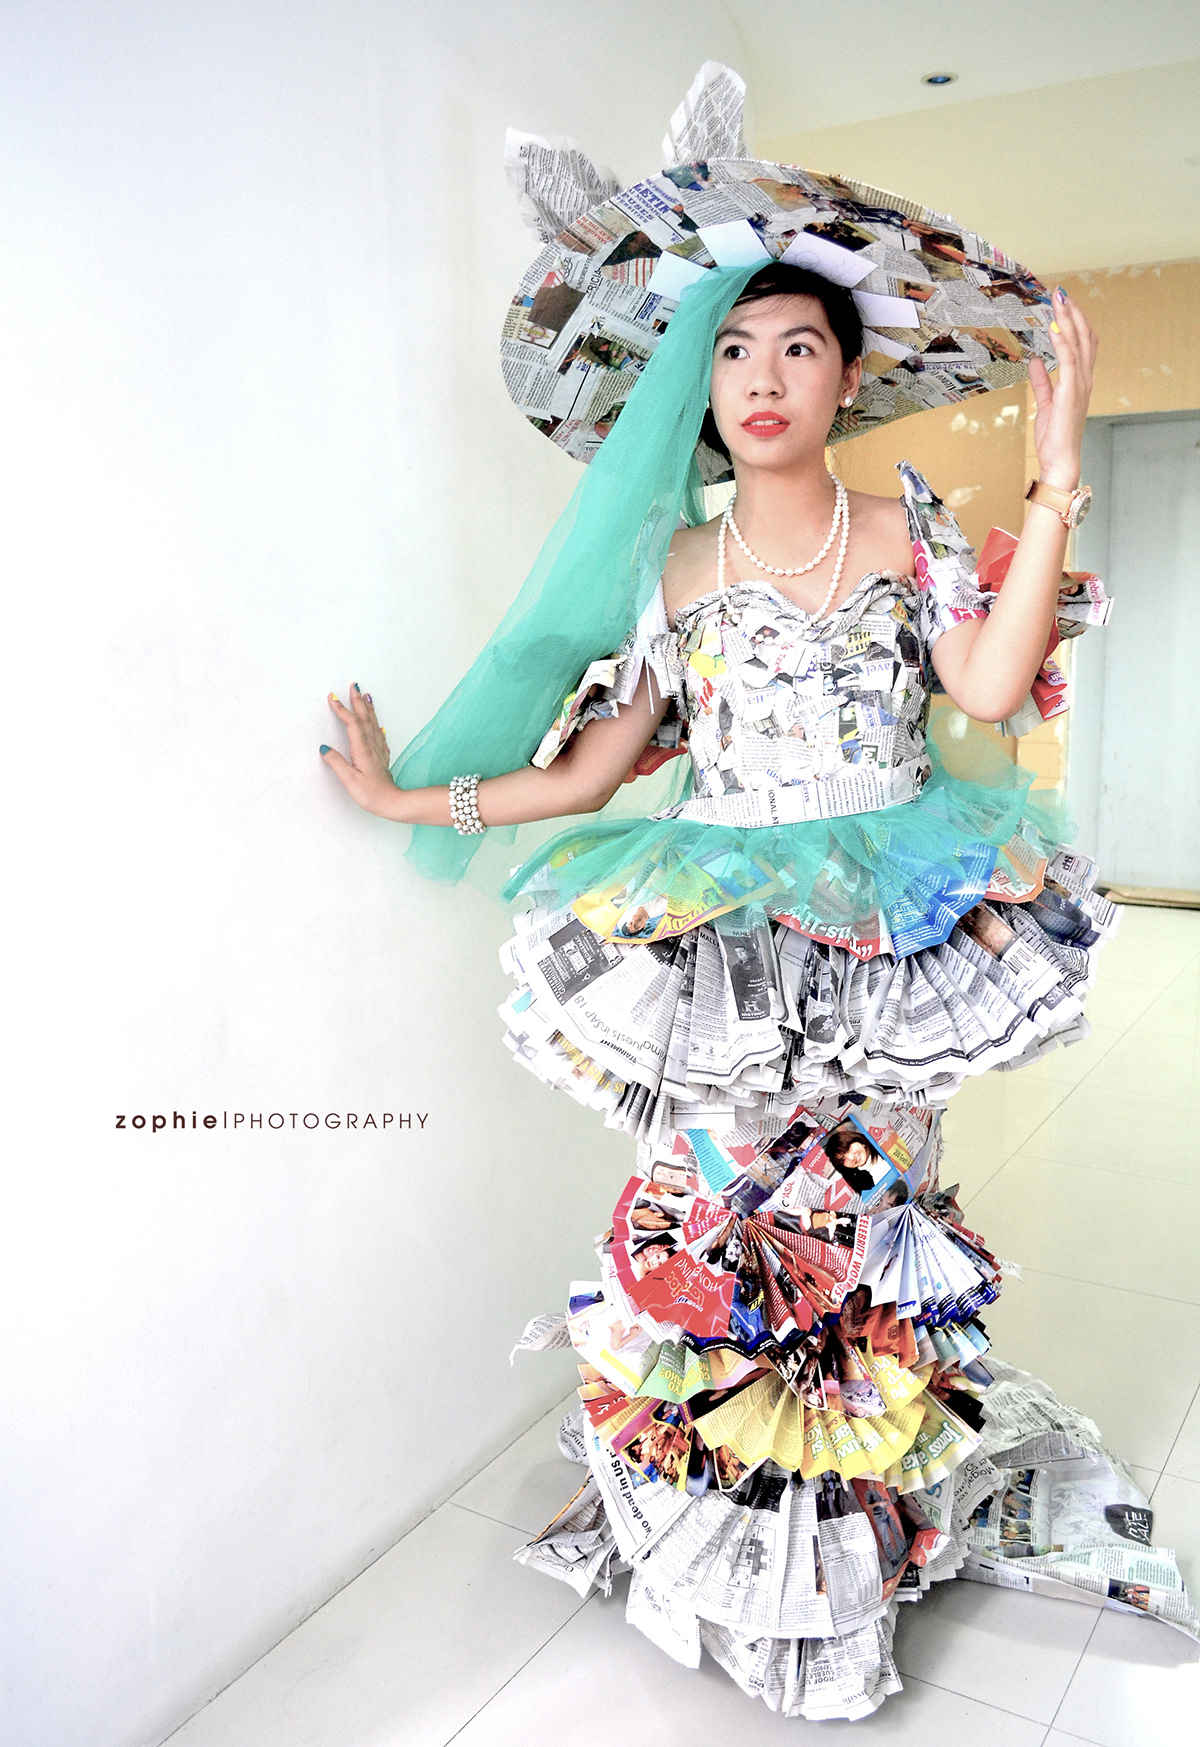 #bihispinoy #photography #filipiniana #couture  #Fashion #Fashion Styling #recycled materials #school competition #Filipino week